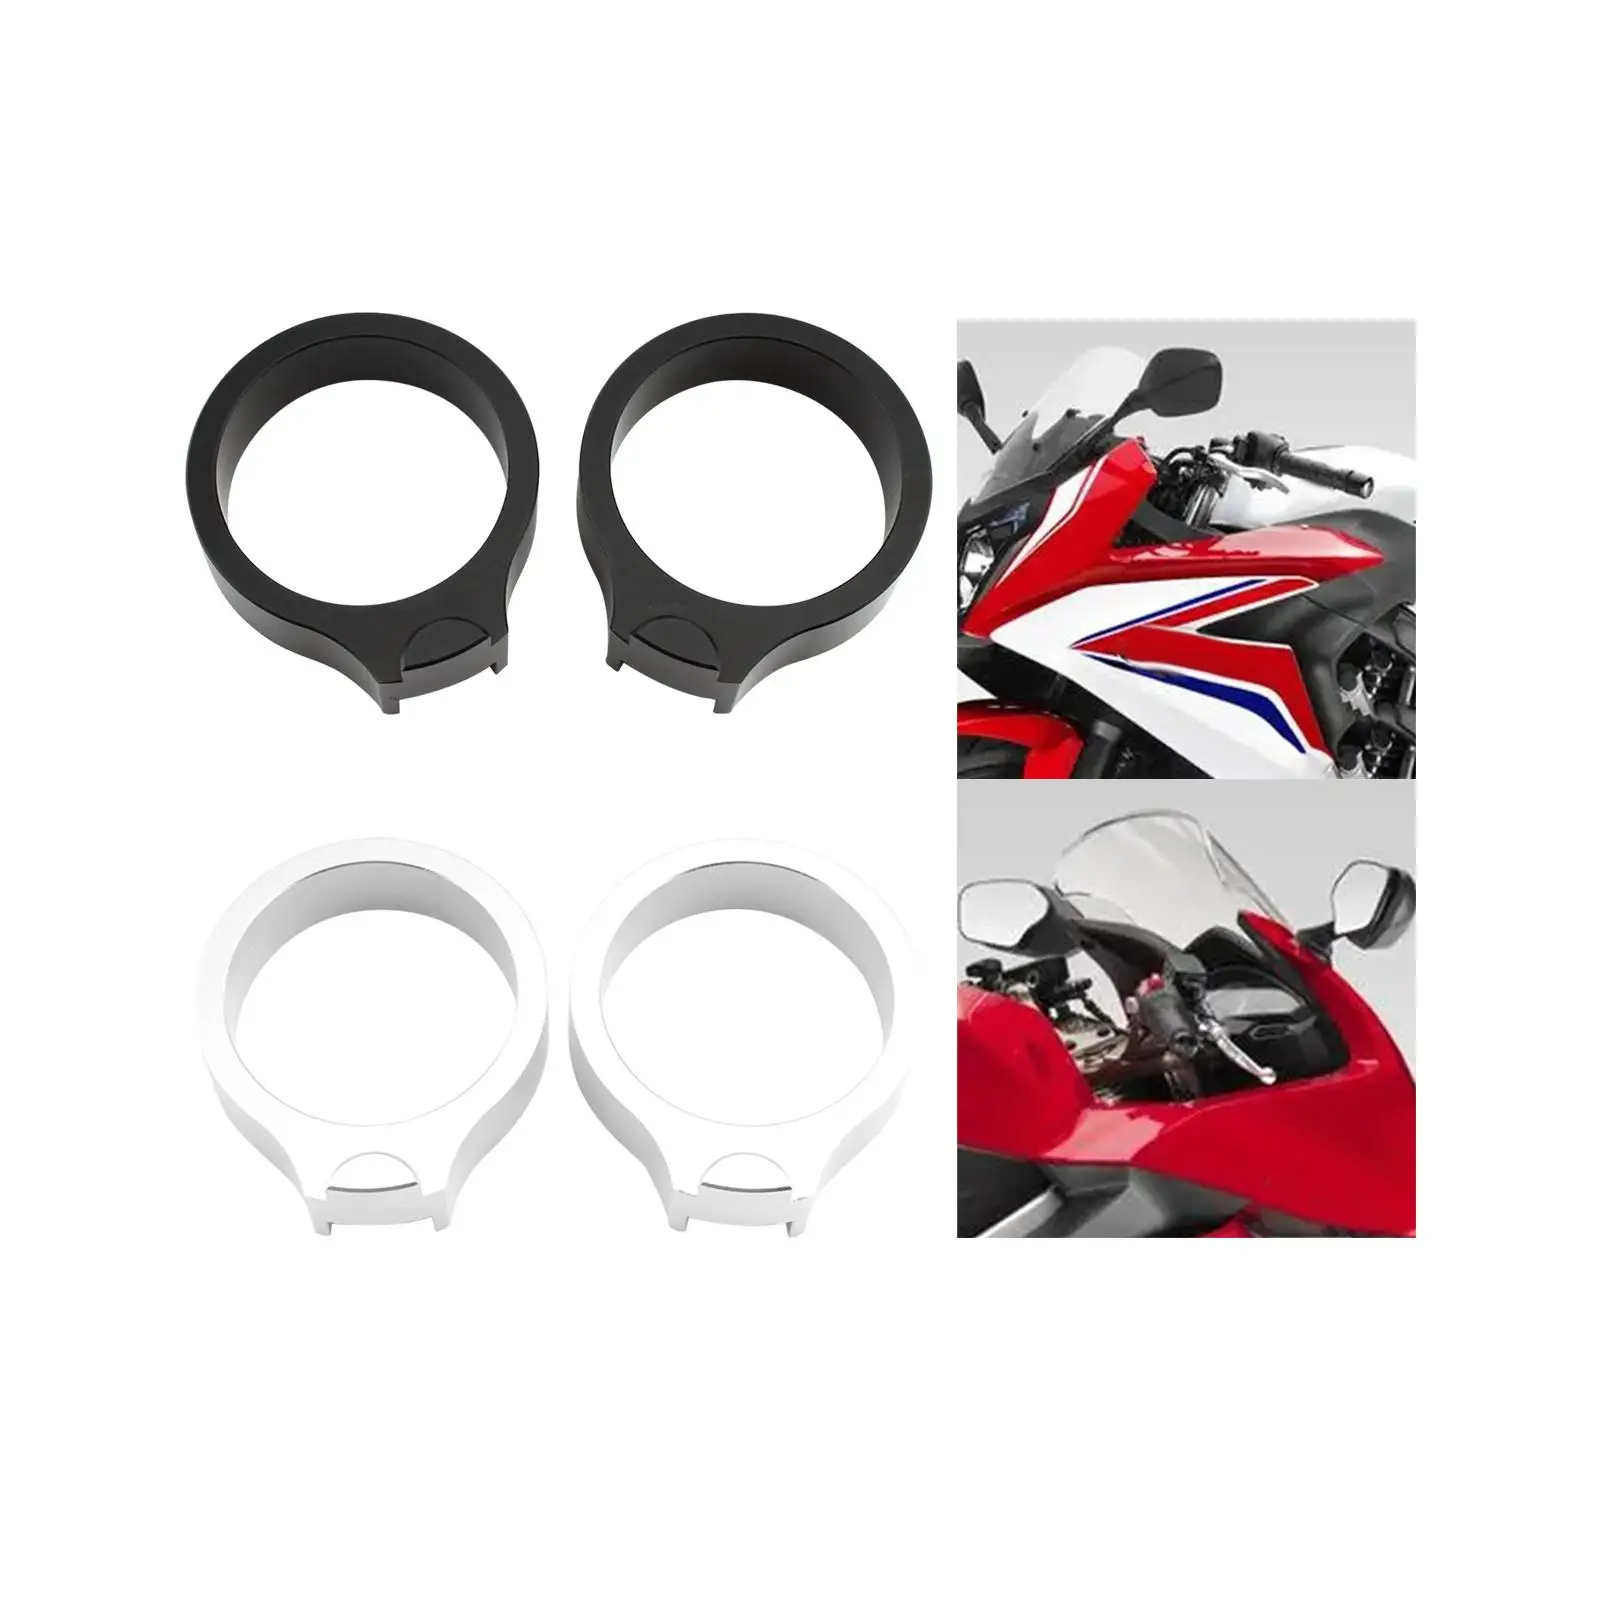 2x Motorcycle Handlebar Risers Replaces Mounting Hardware Easy Installation for Honda CBR1100XX Super Blackbird 43mm